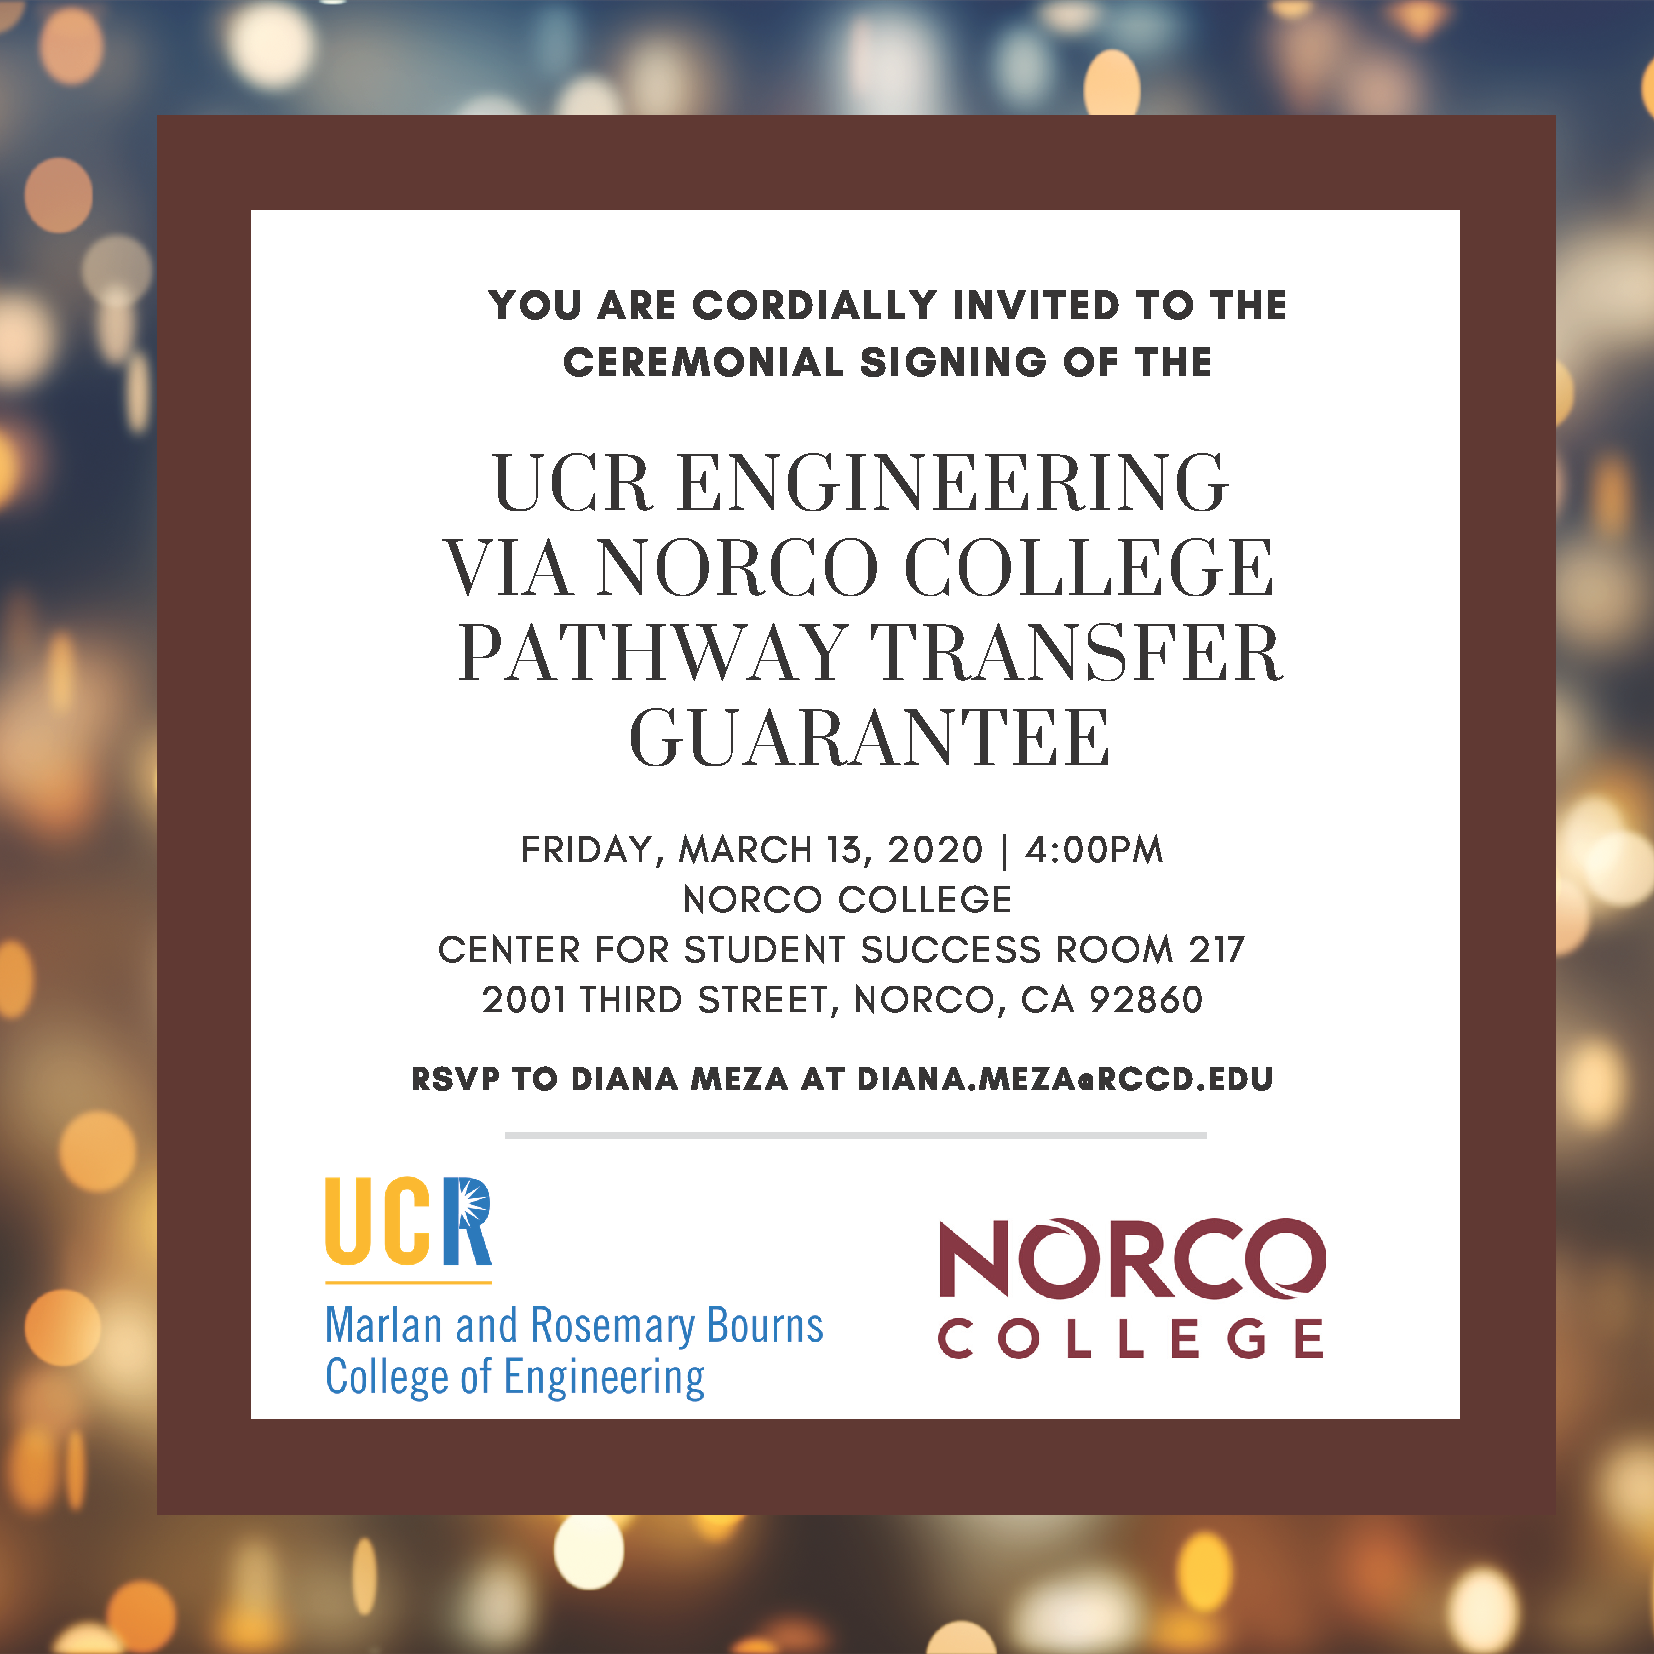 UCR Engineering via Norco College Ceremonial Signing Invite